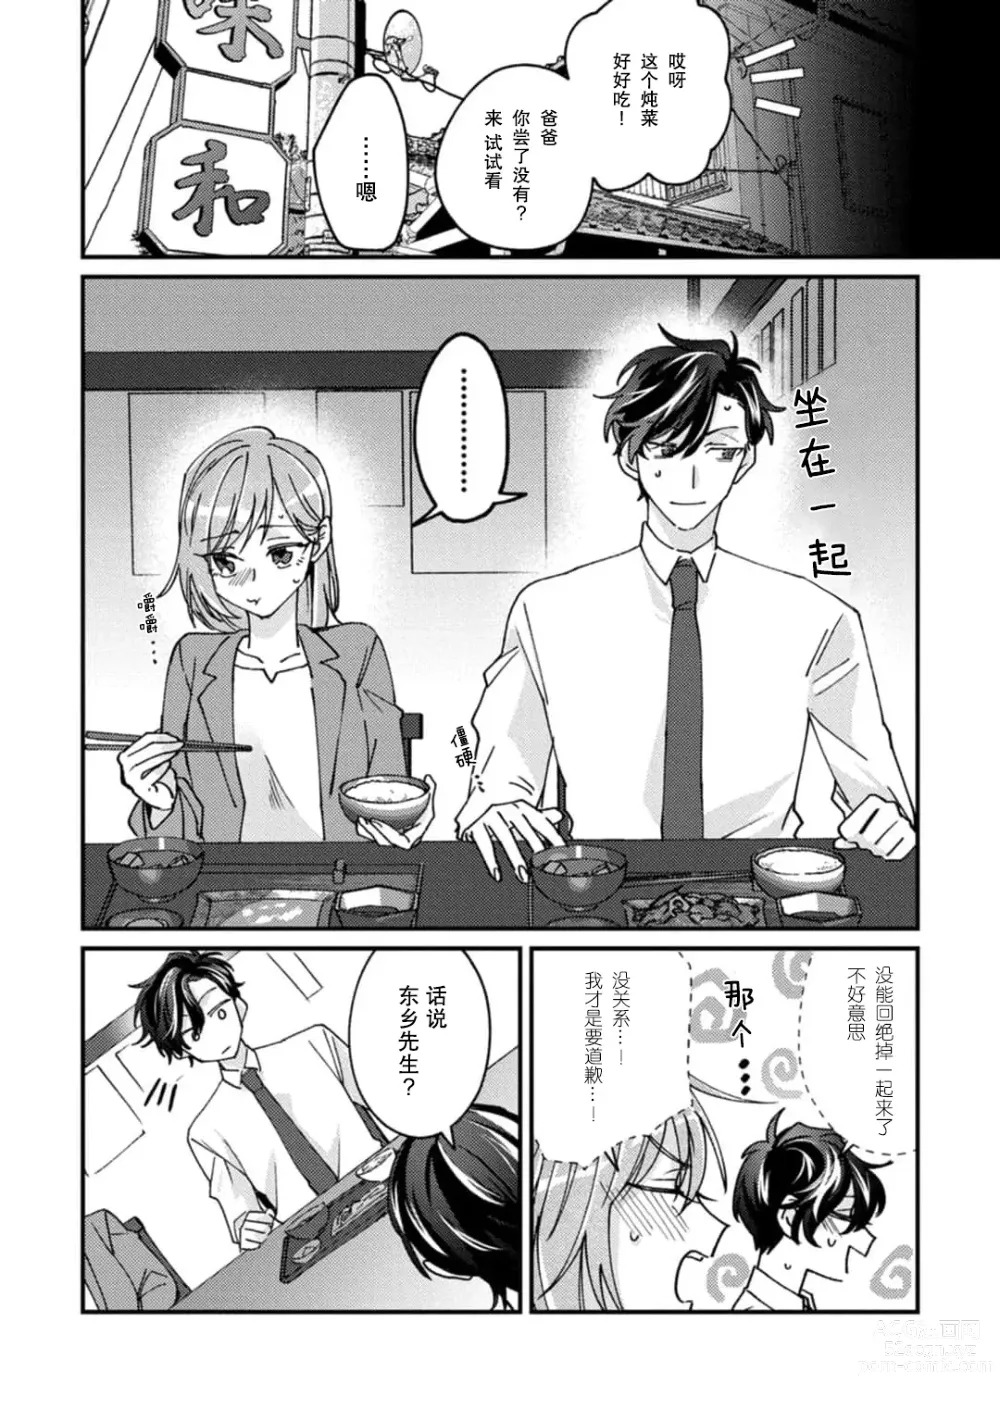 Page 95 of manga 请勿打扰！酒店客房服务员被常客绅士夺走第一次 1-3